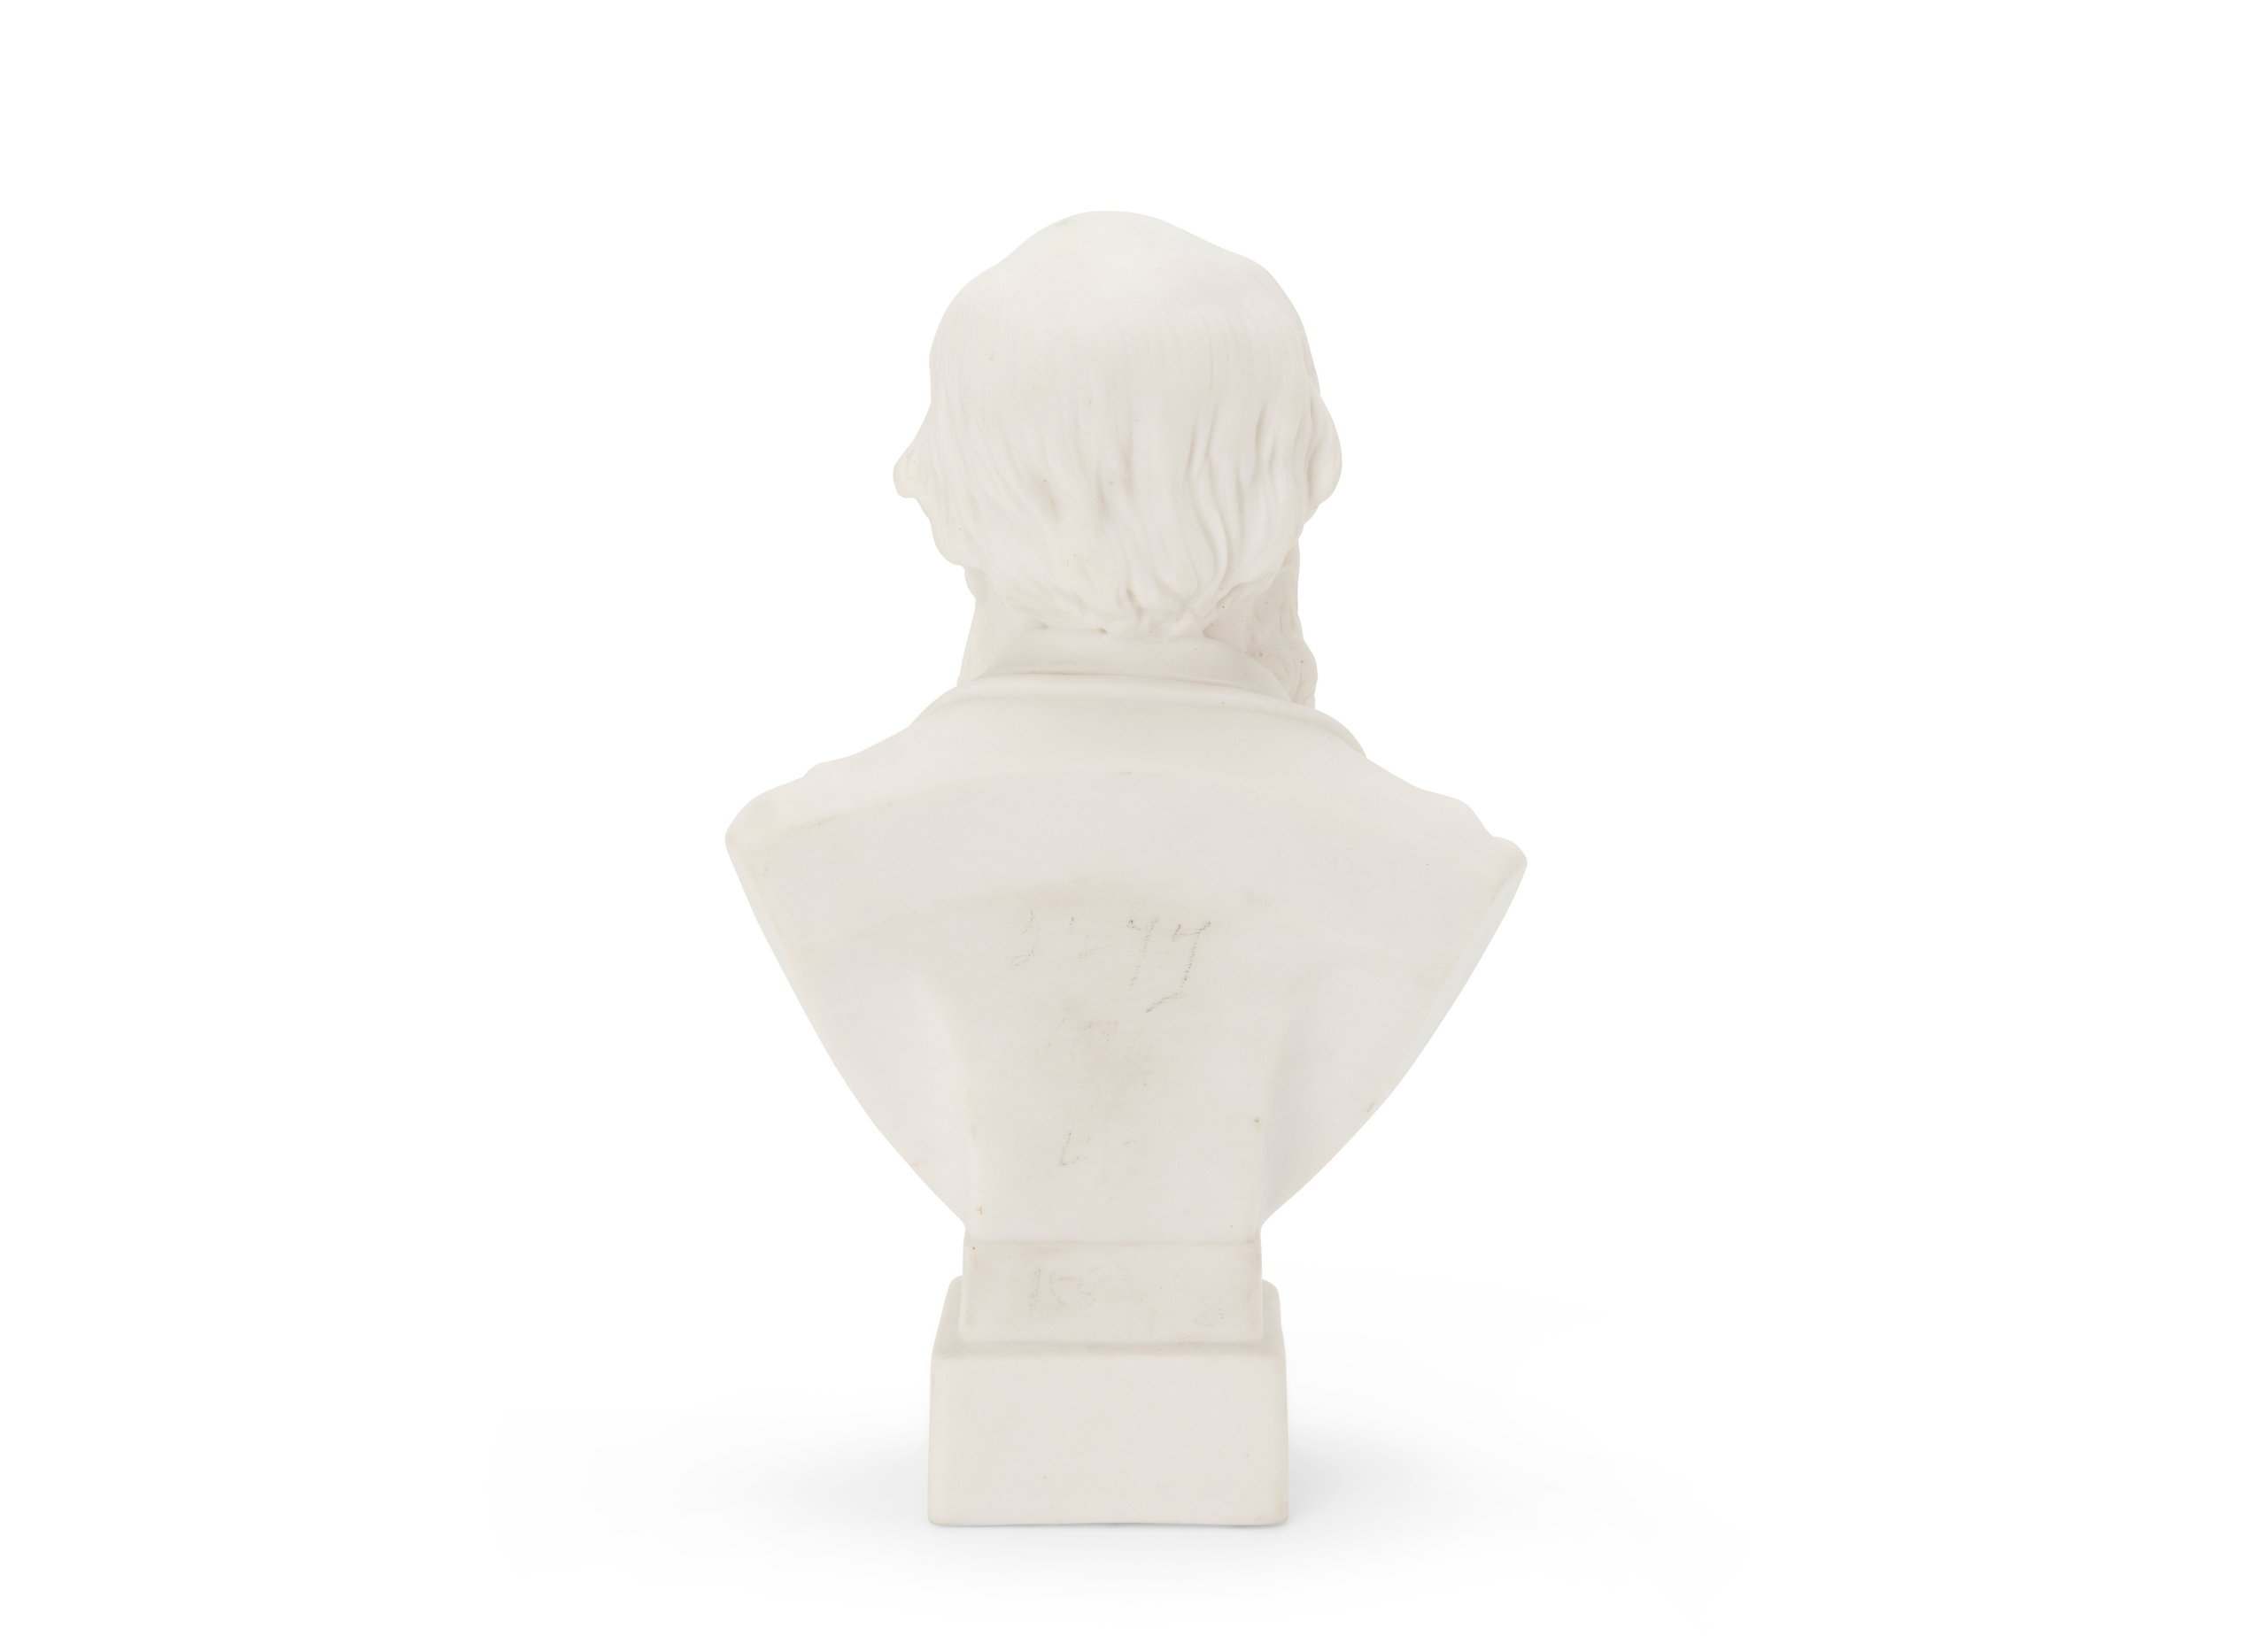 Porcelain bust of Charles Darwin